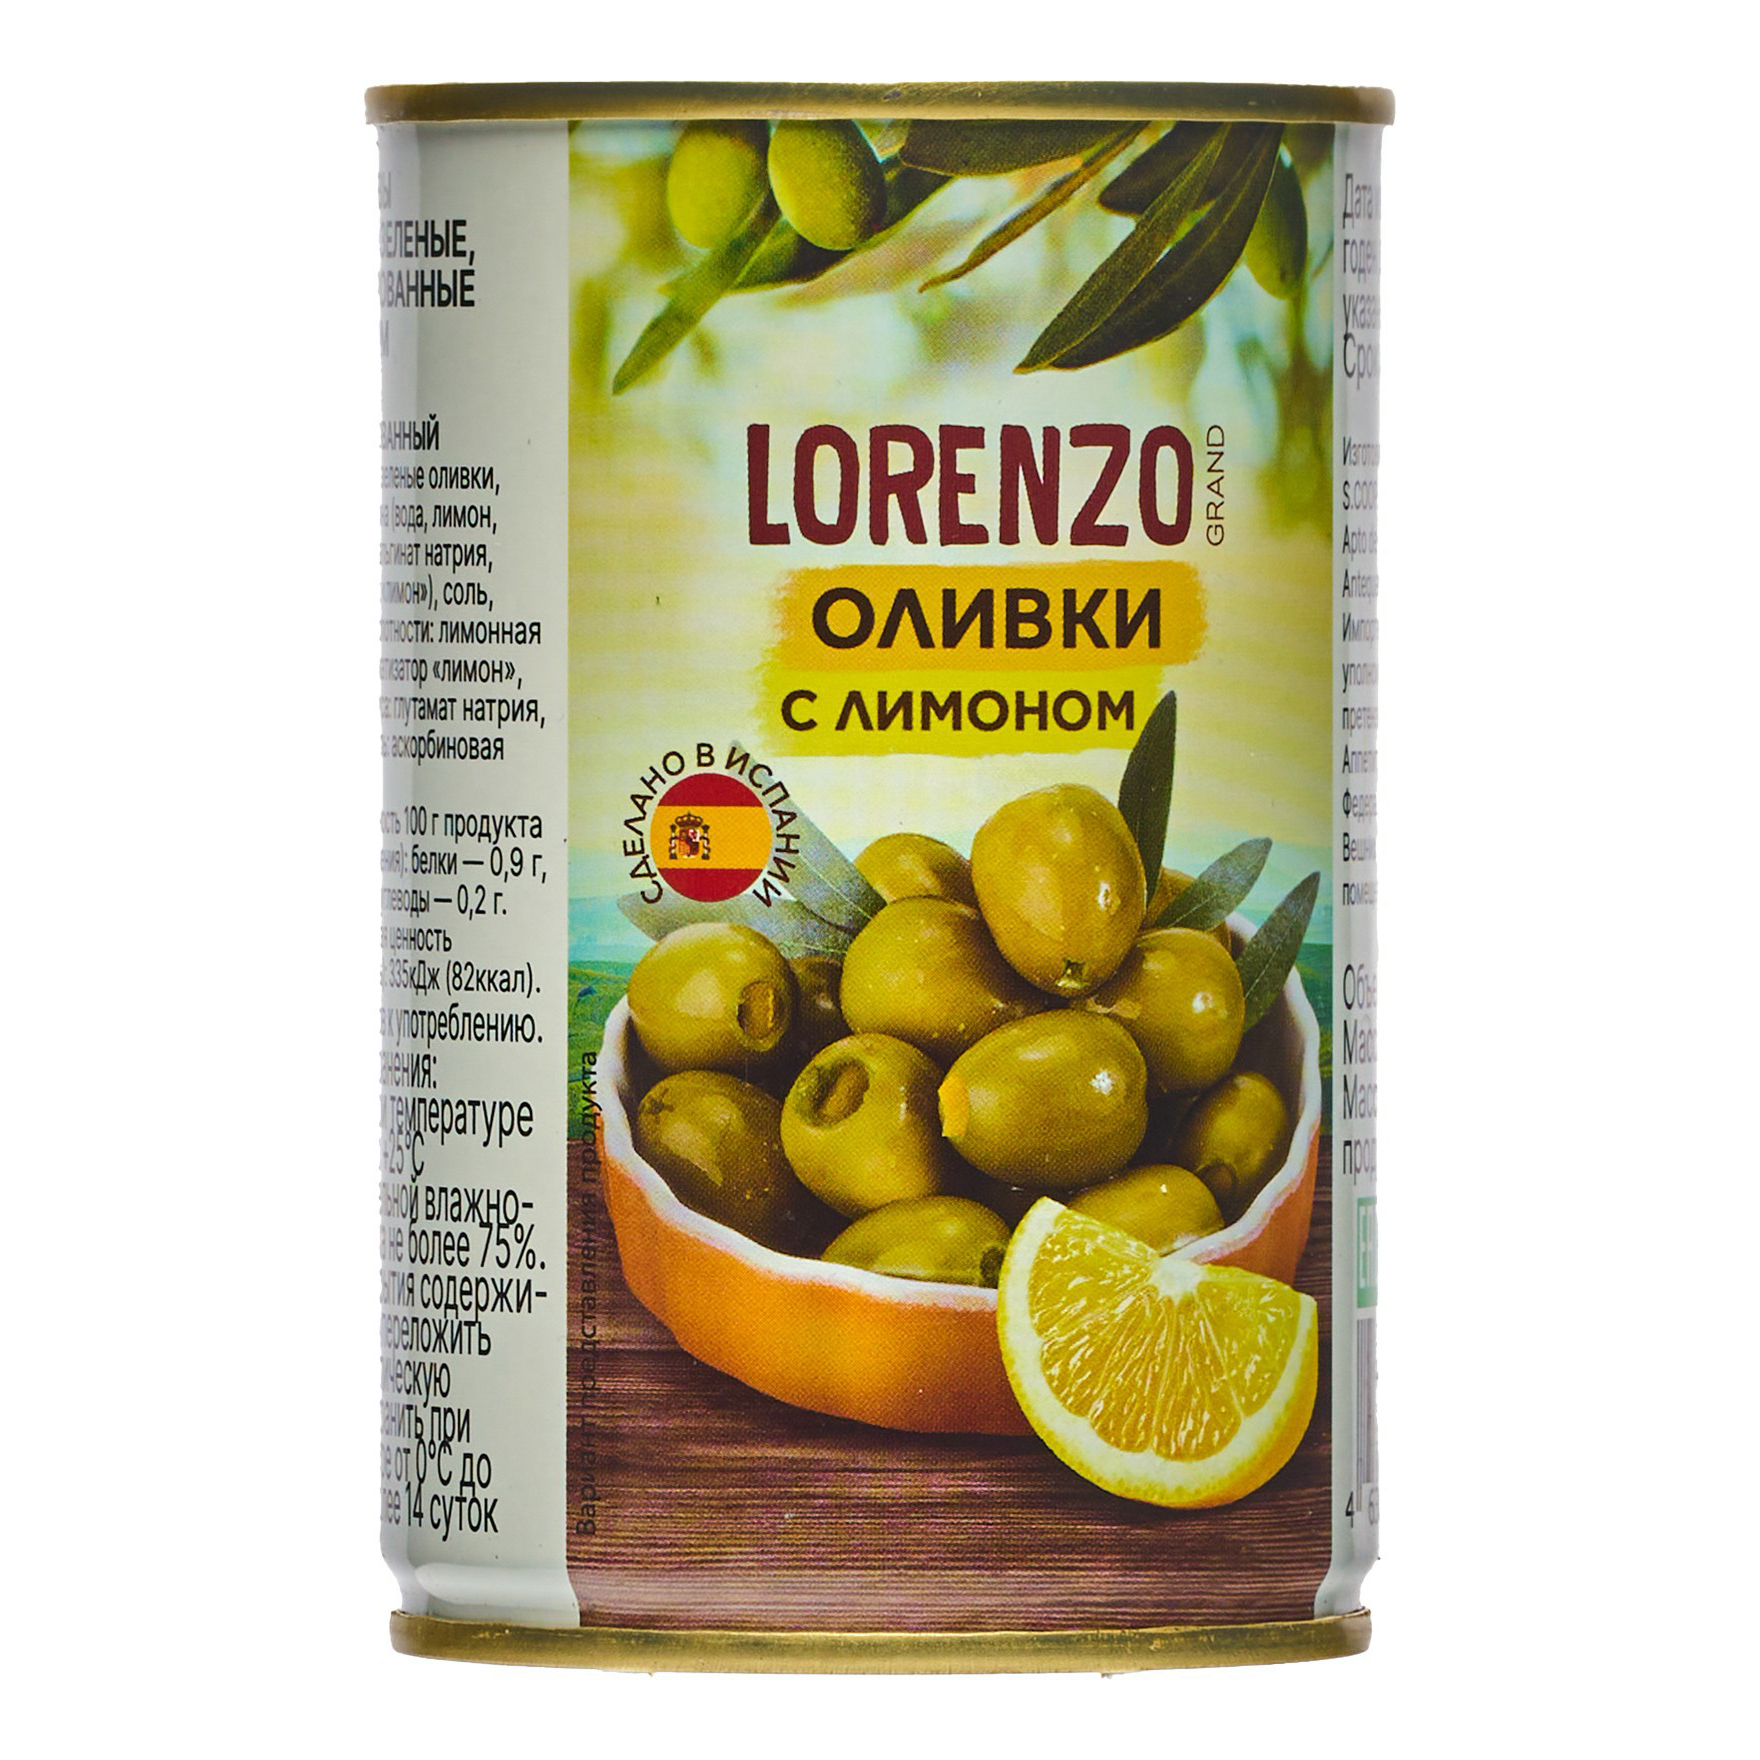 Оливки Grand Lorenzo зеленые c лимоном 314 мл